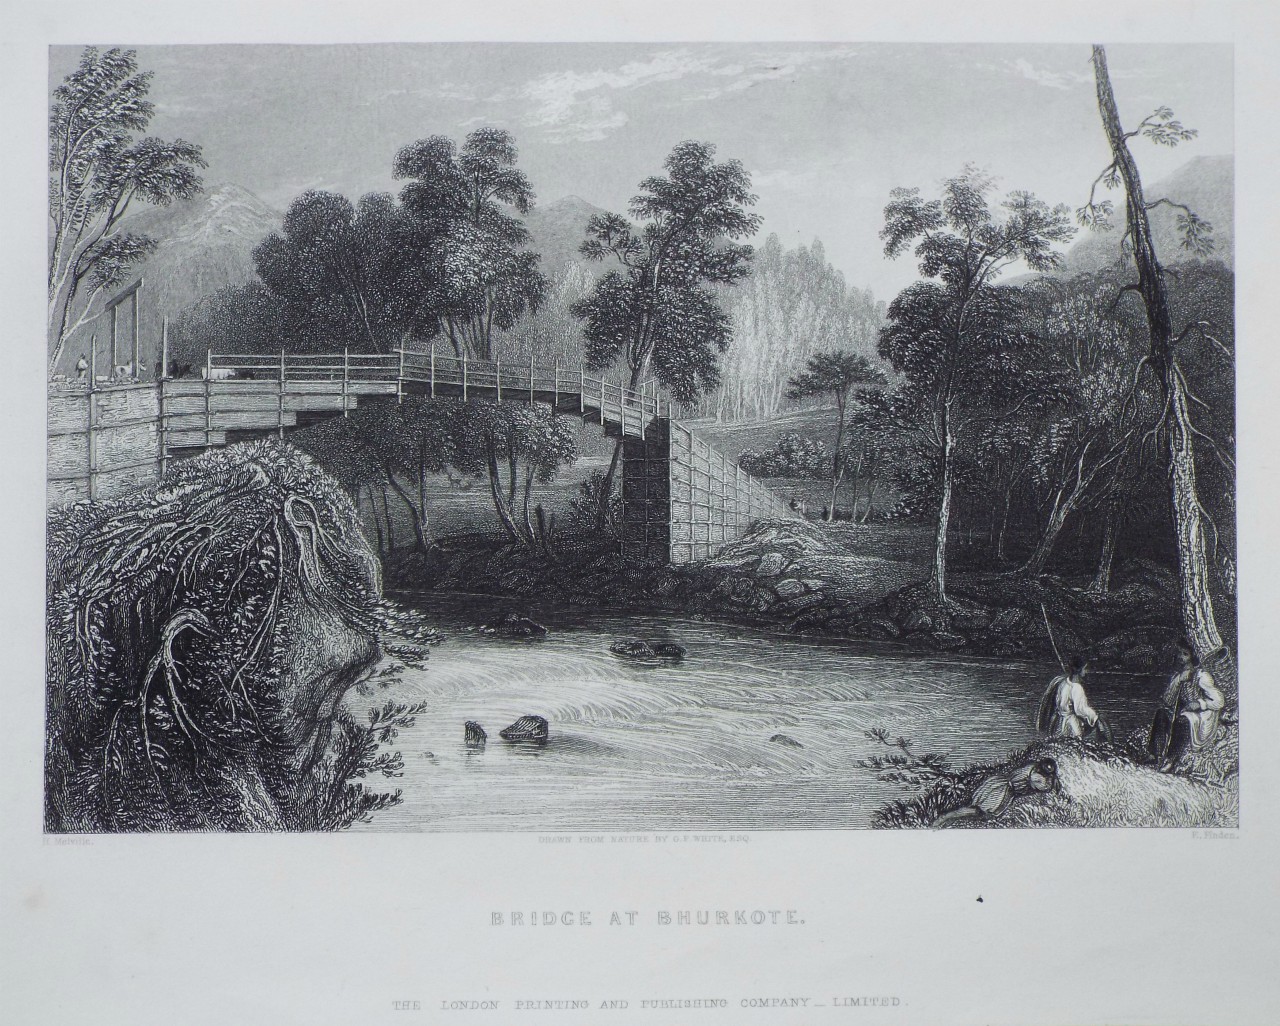 Print - Bridge at Bhurkote. - Le